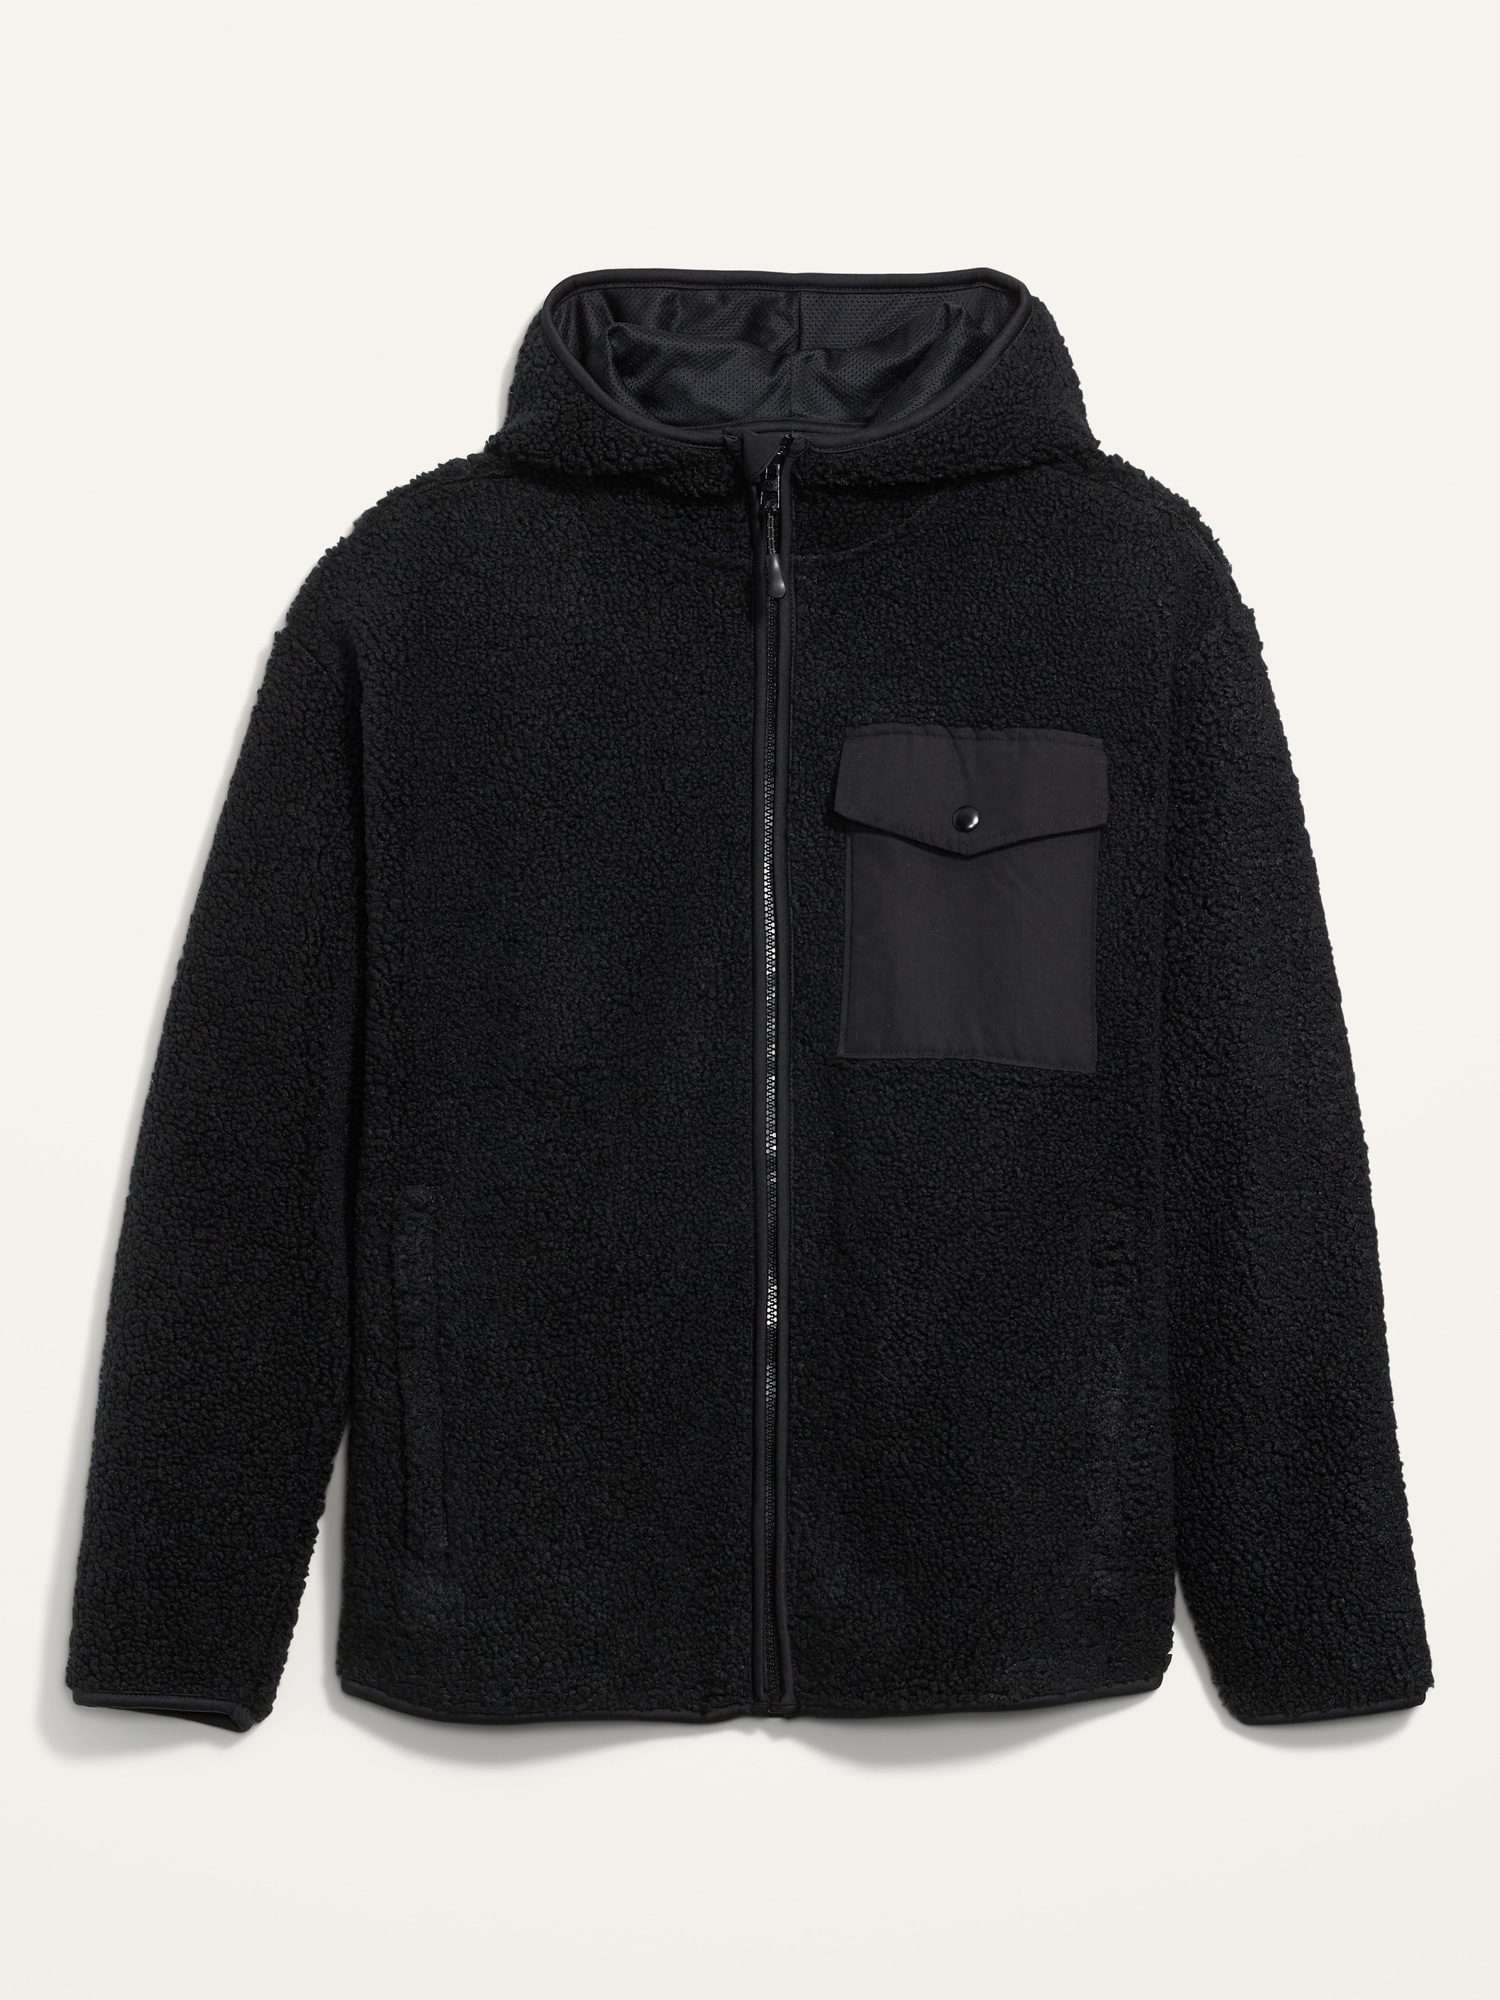 Marquette Jacket, Cozy Sherpa Sweater